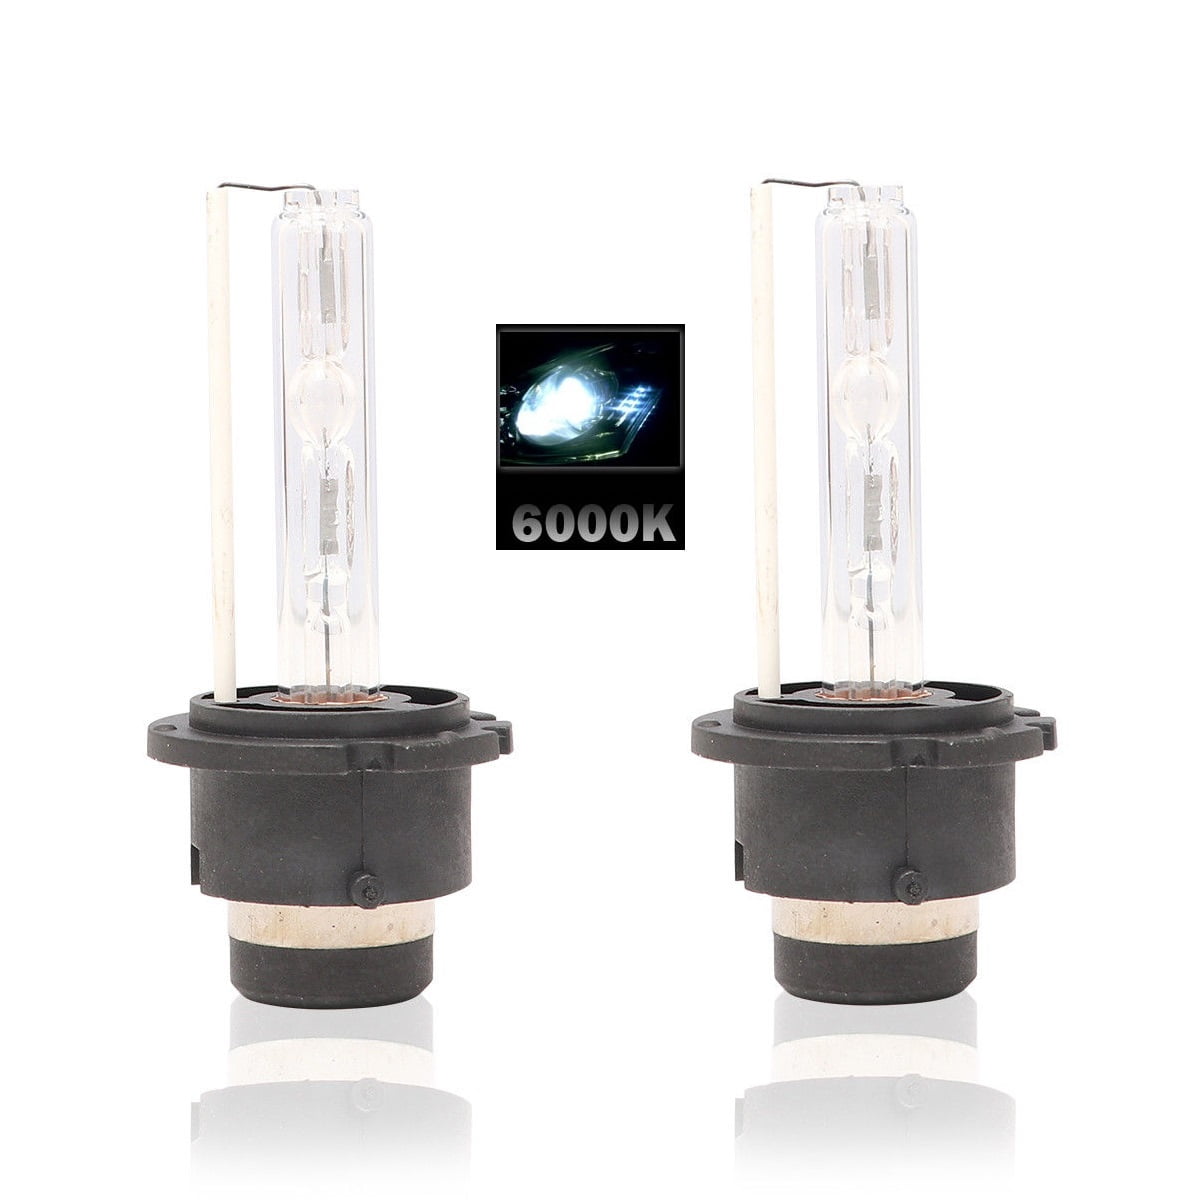 2x D2R 35W 6000K HID Headlight Bulbs Xenon Replacement Low/High